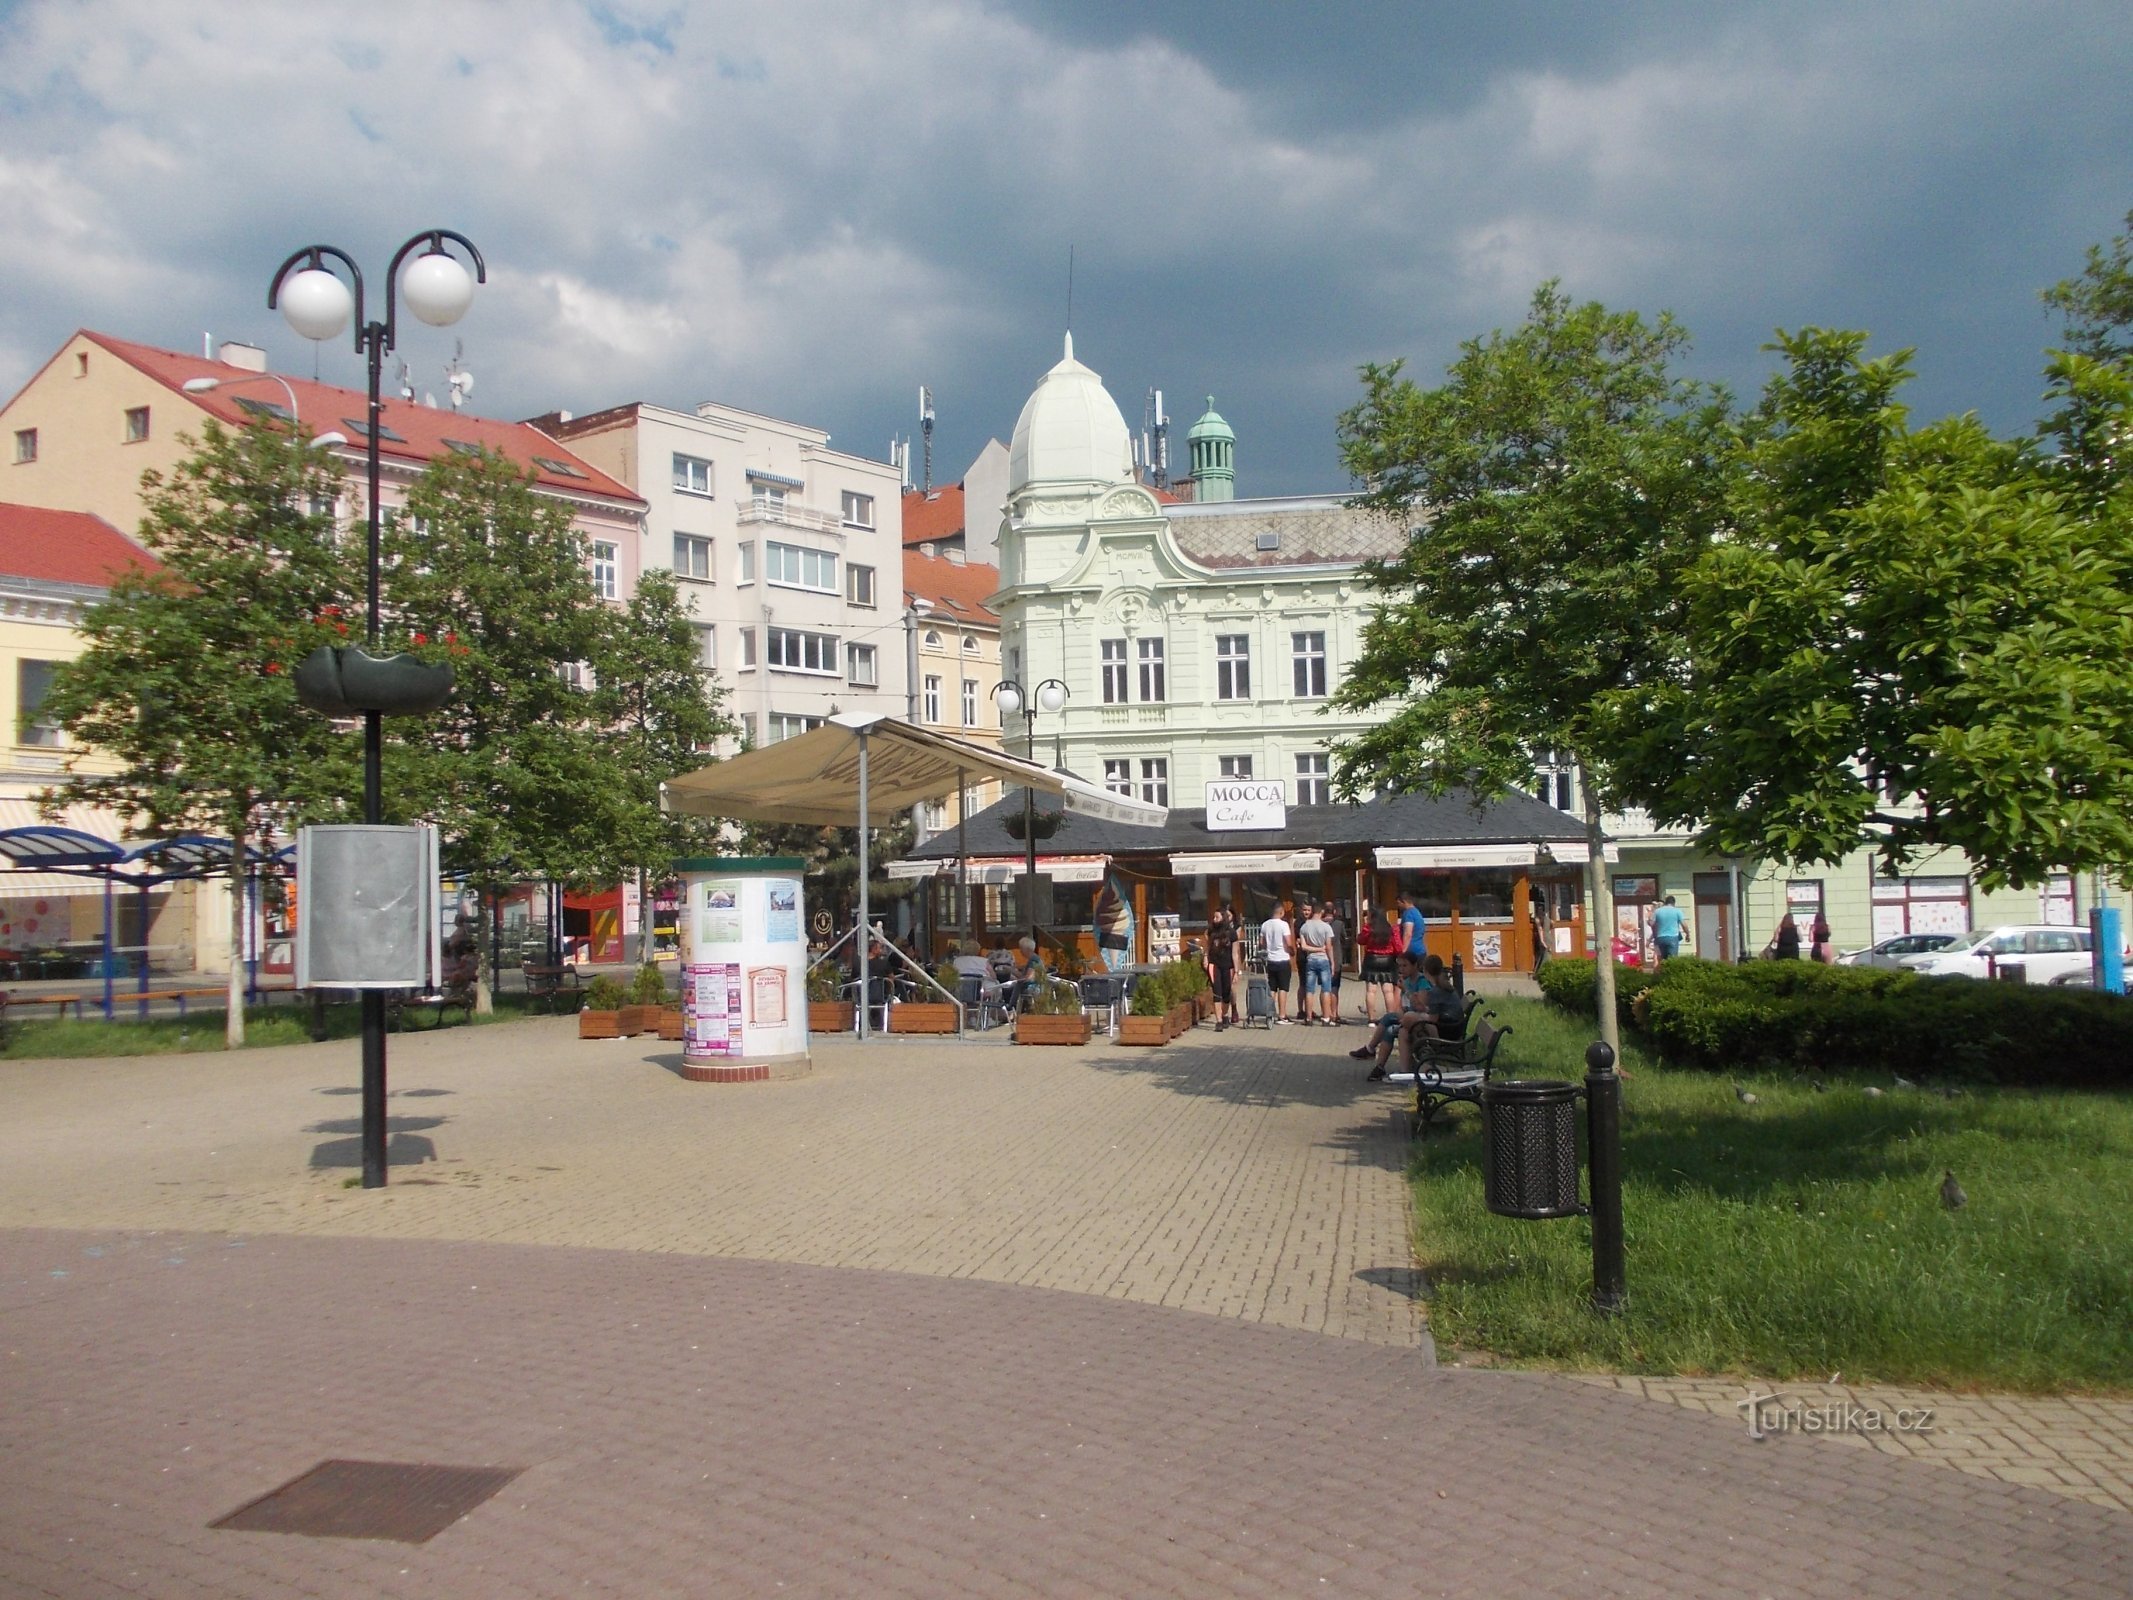 Beneš square